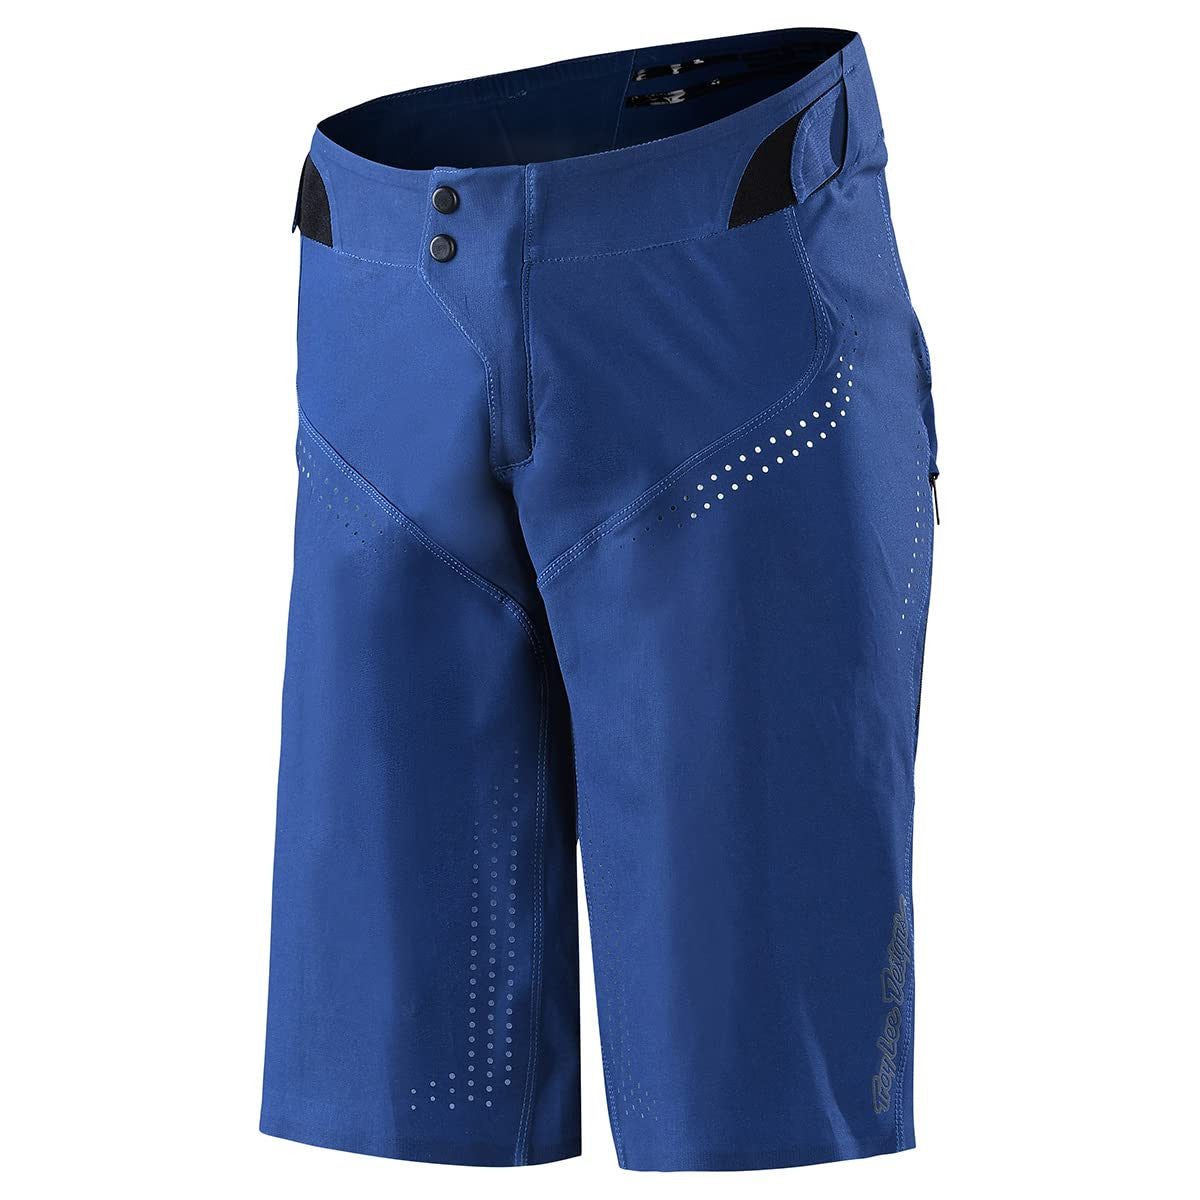 Troy Lee Designs Sprint Ultra Short Solid Dark Slate Blue Bike Shorts